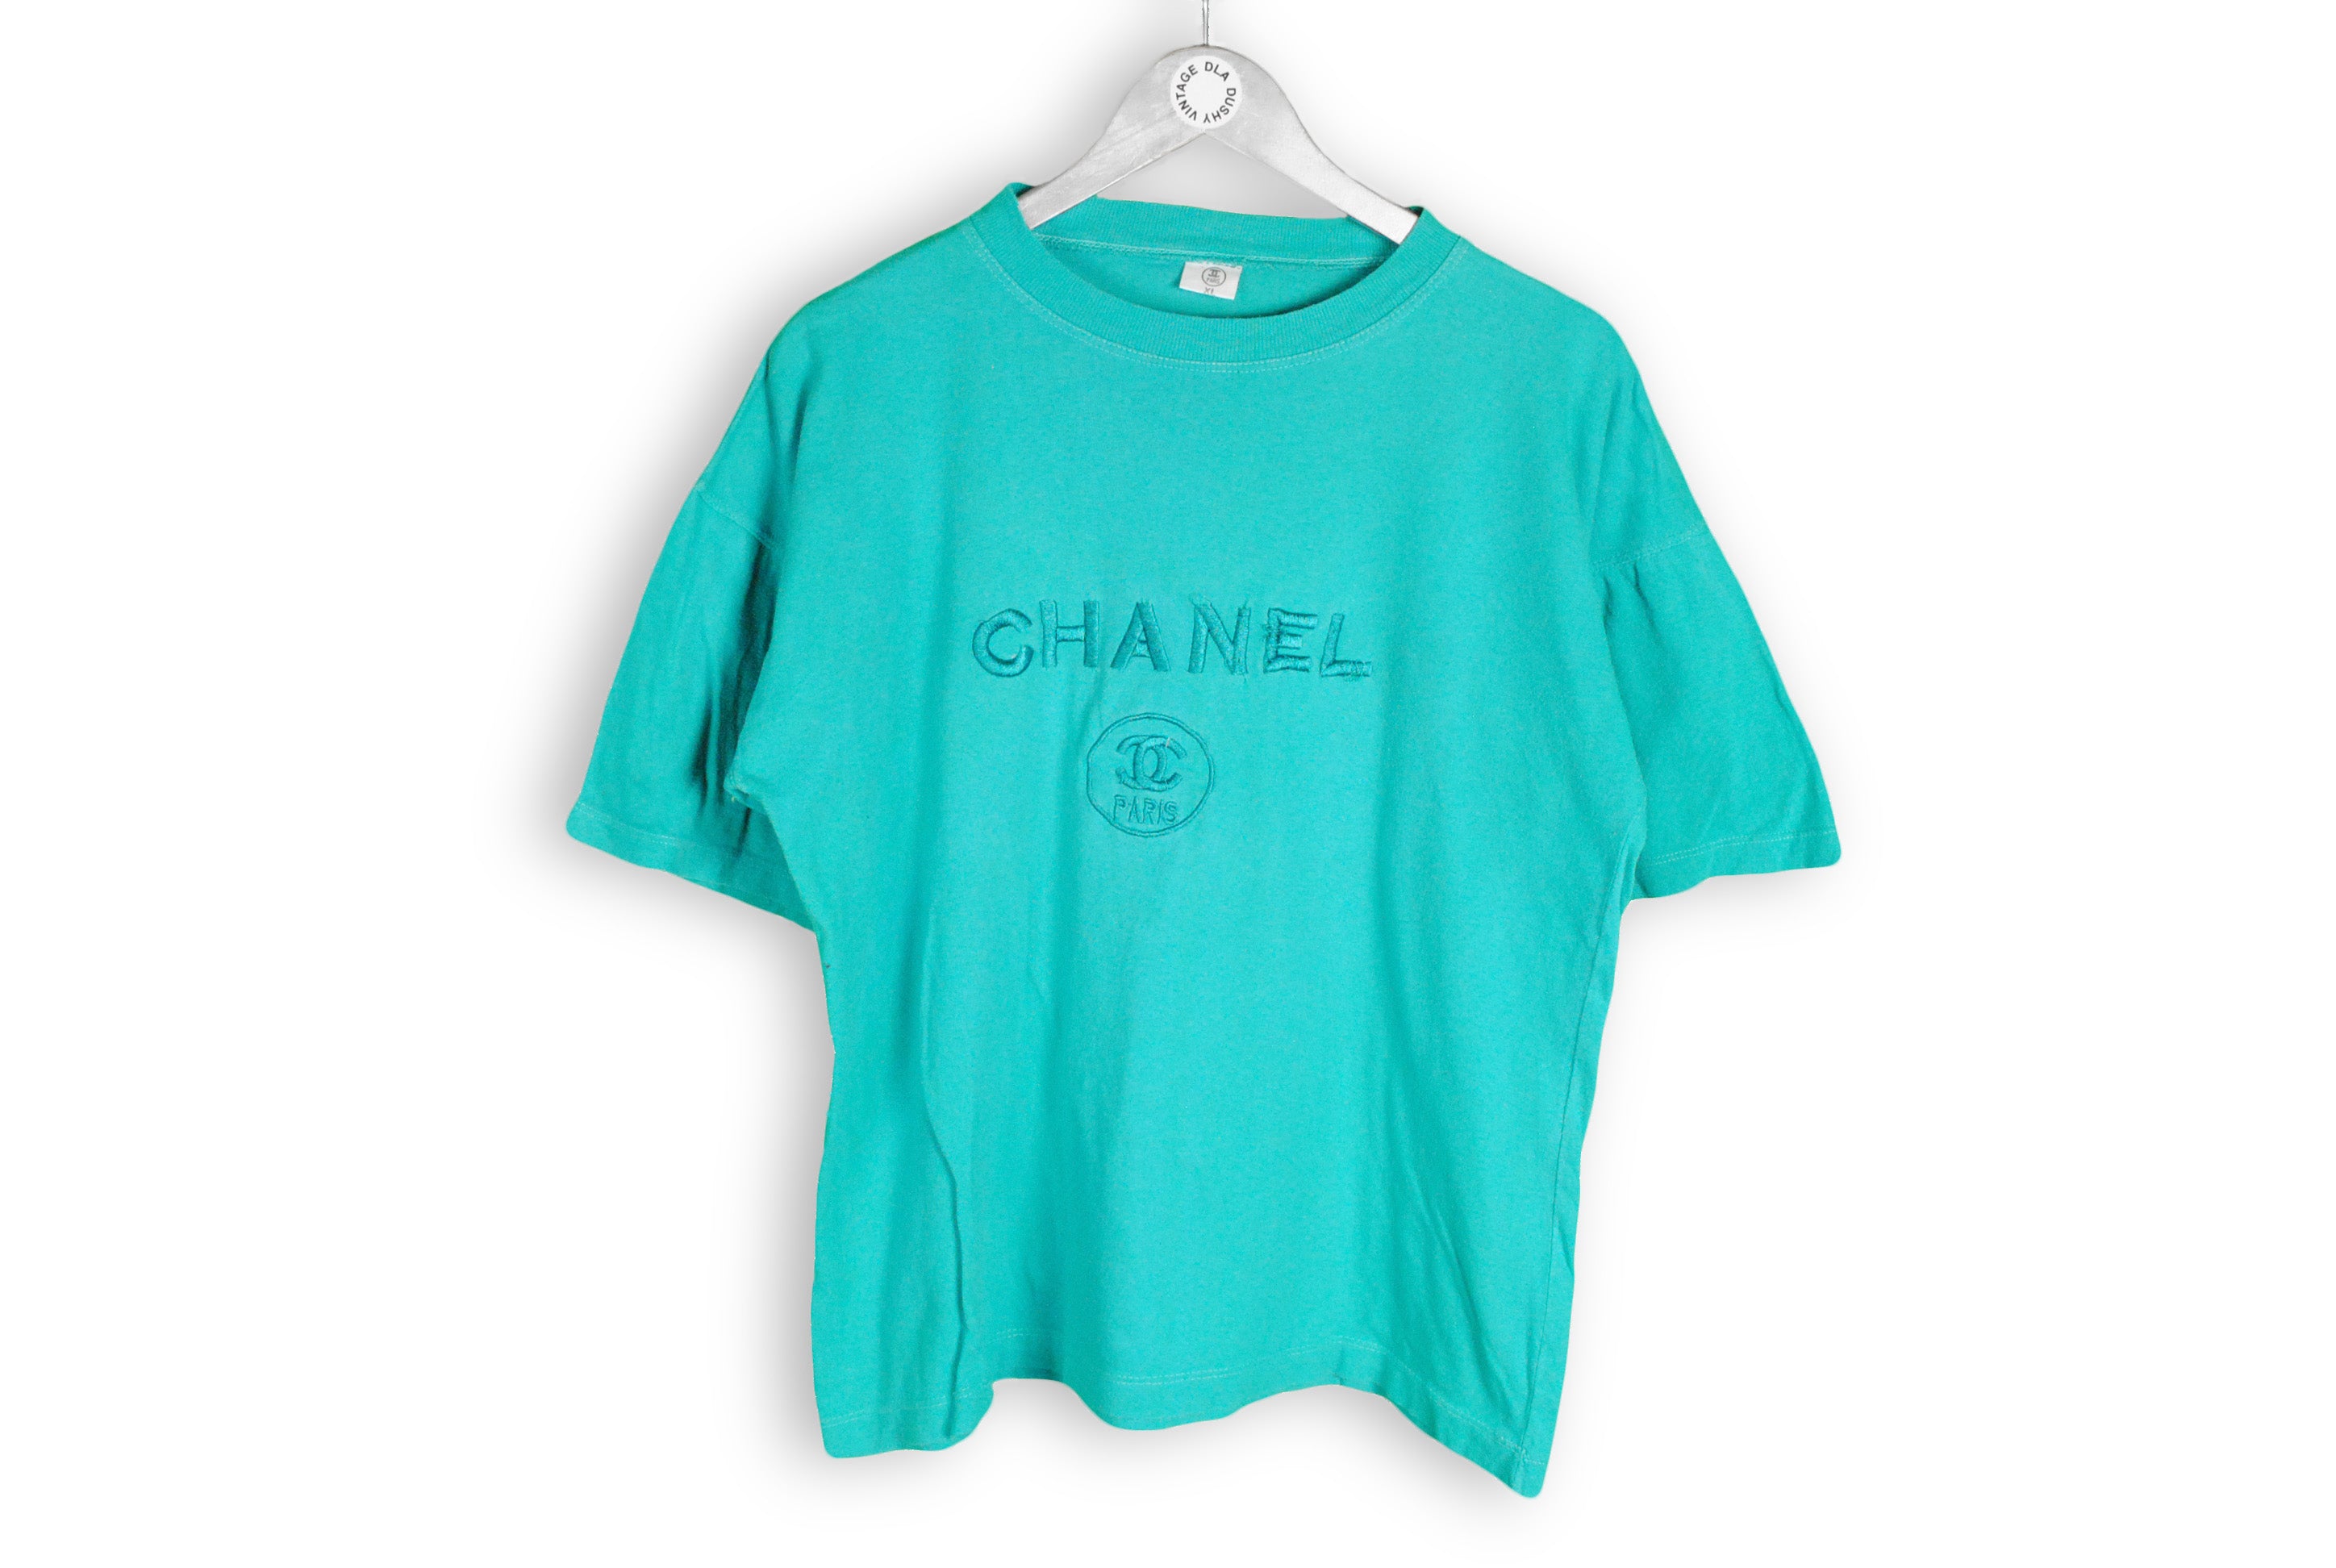 Vintage Chanel Paris Embroidery T Shirt Rainbow Green Luxury